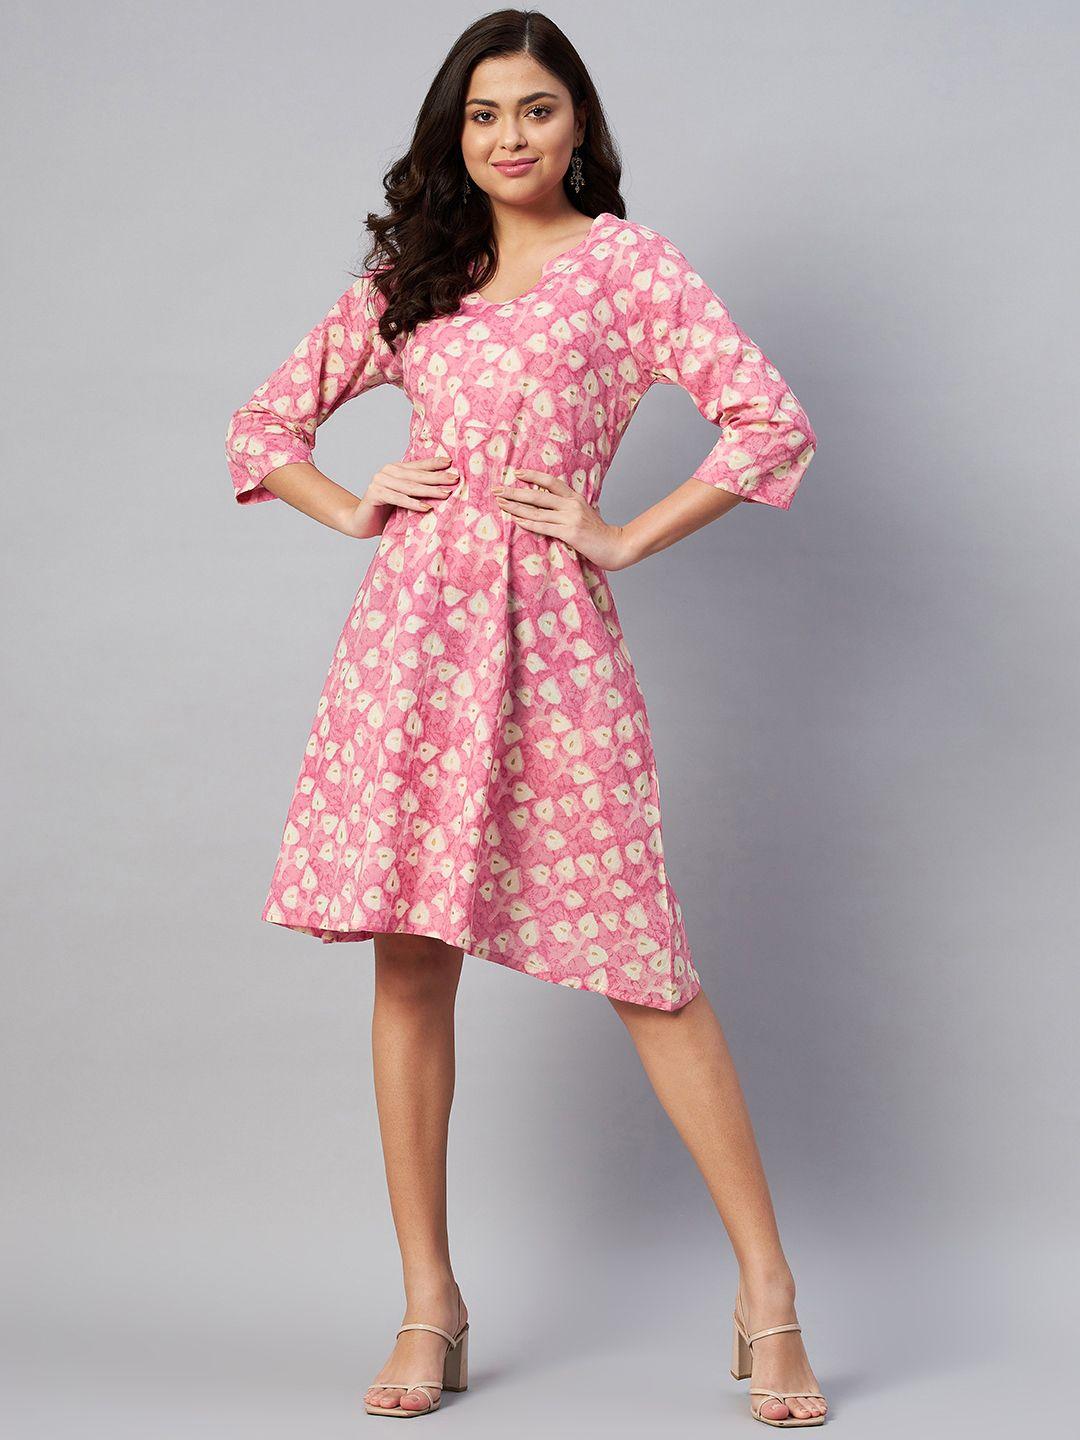 miravan pink ethnic motifs ethnic a-line dress